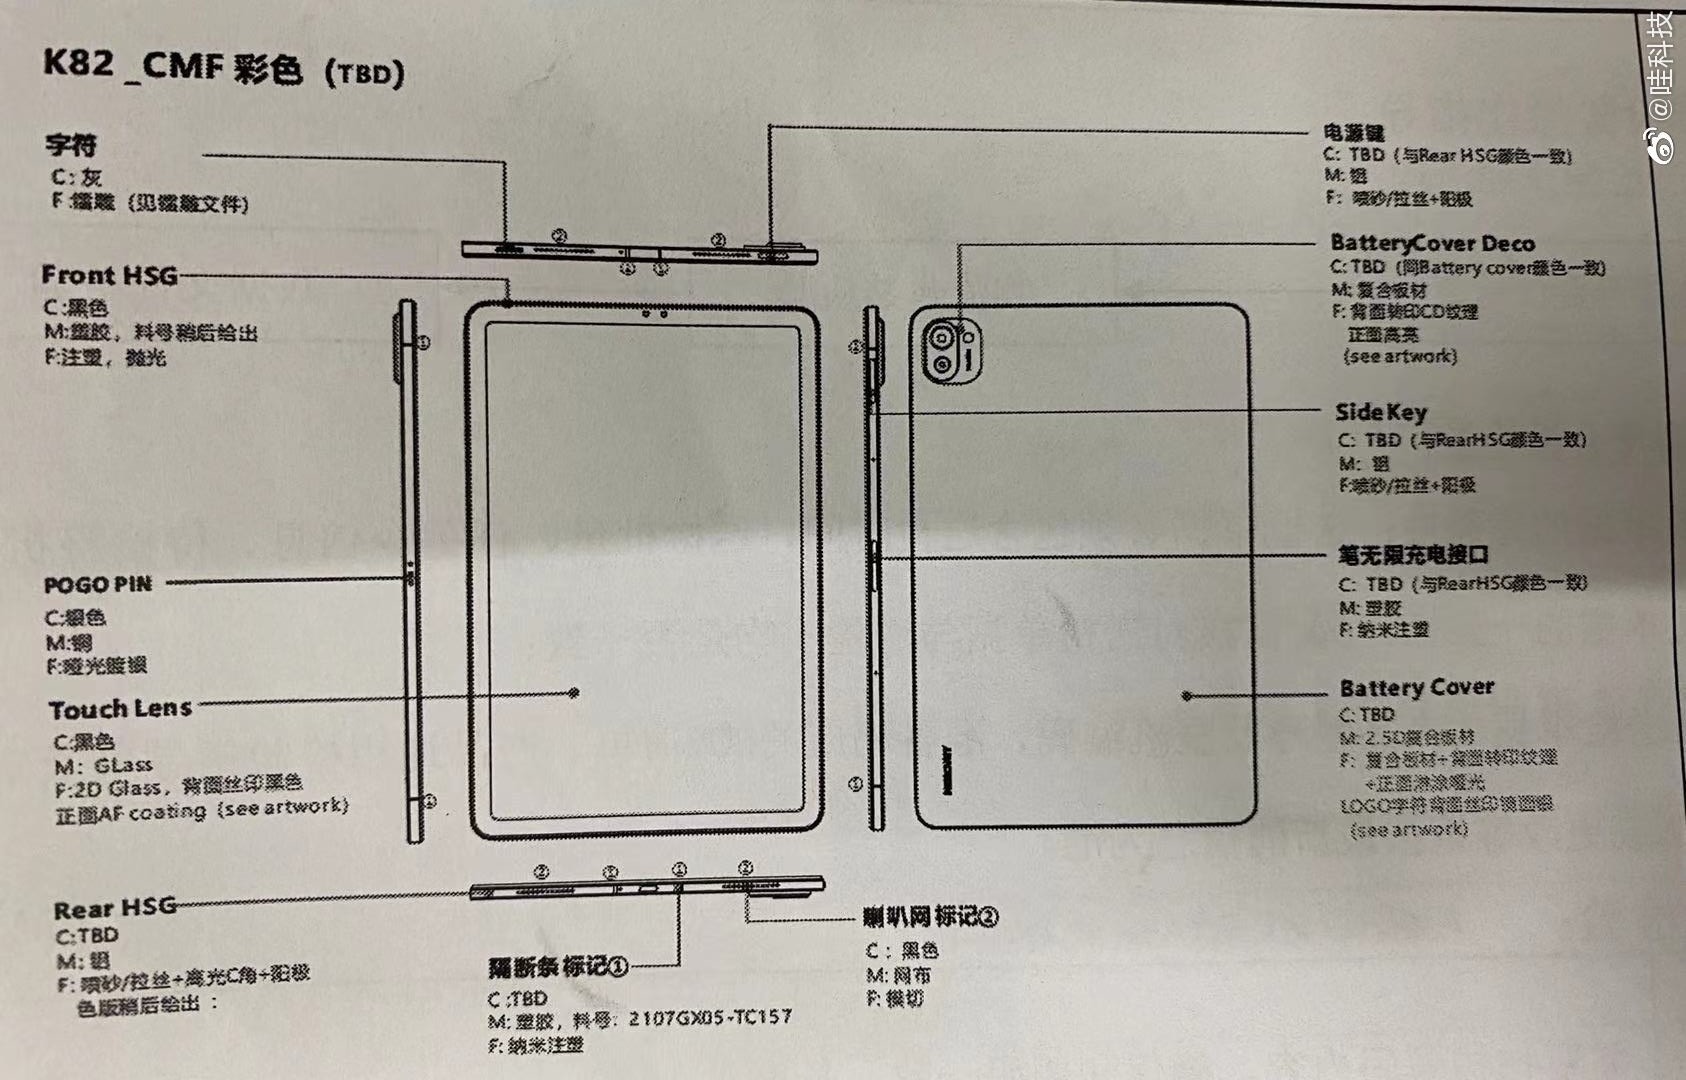 Xiaomi Pad 5 5g